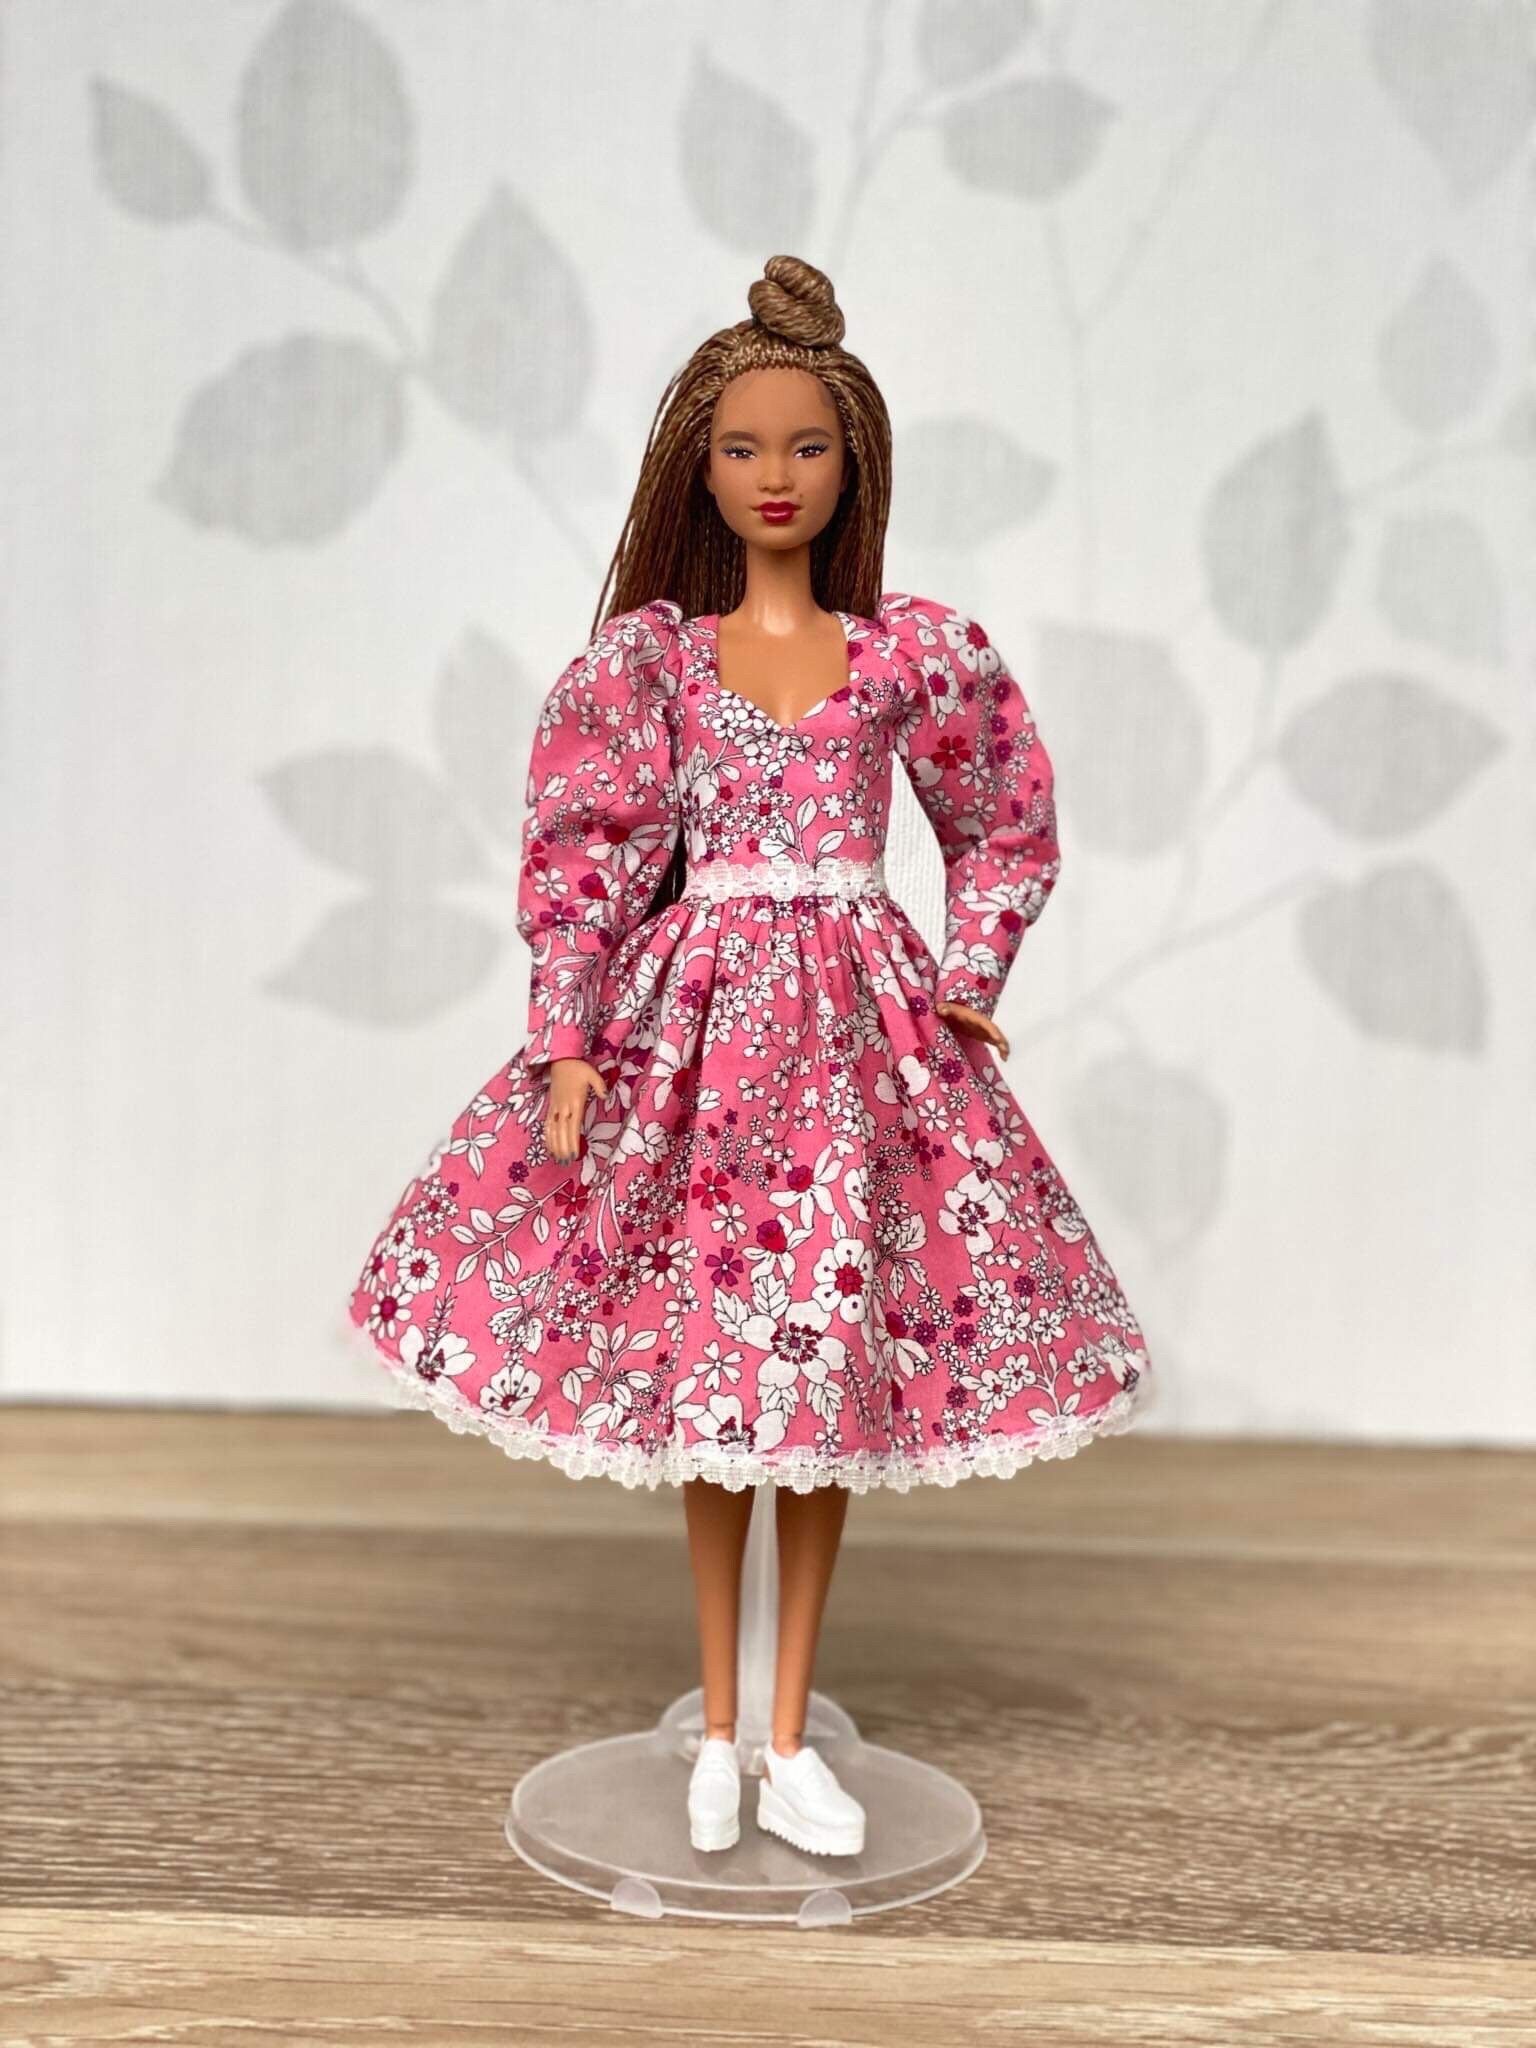 Moschino Barbie and Ken  Dutch Fashion Doll World